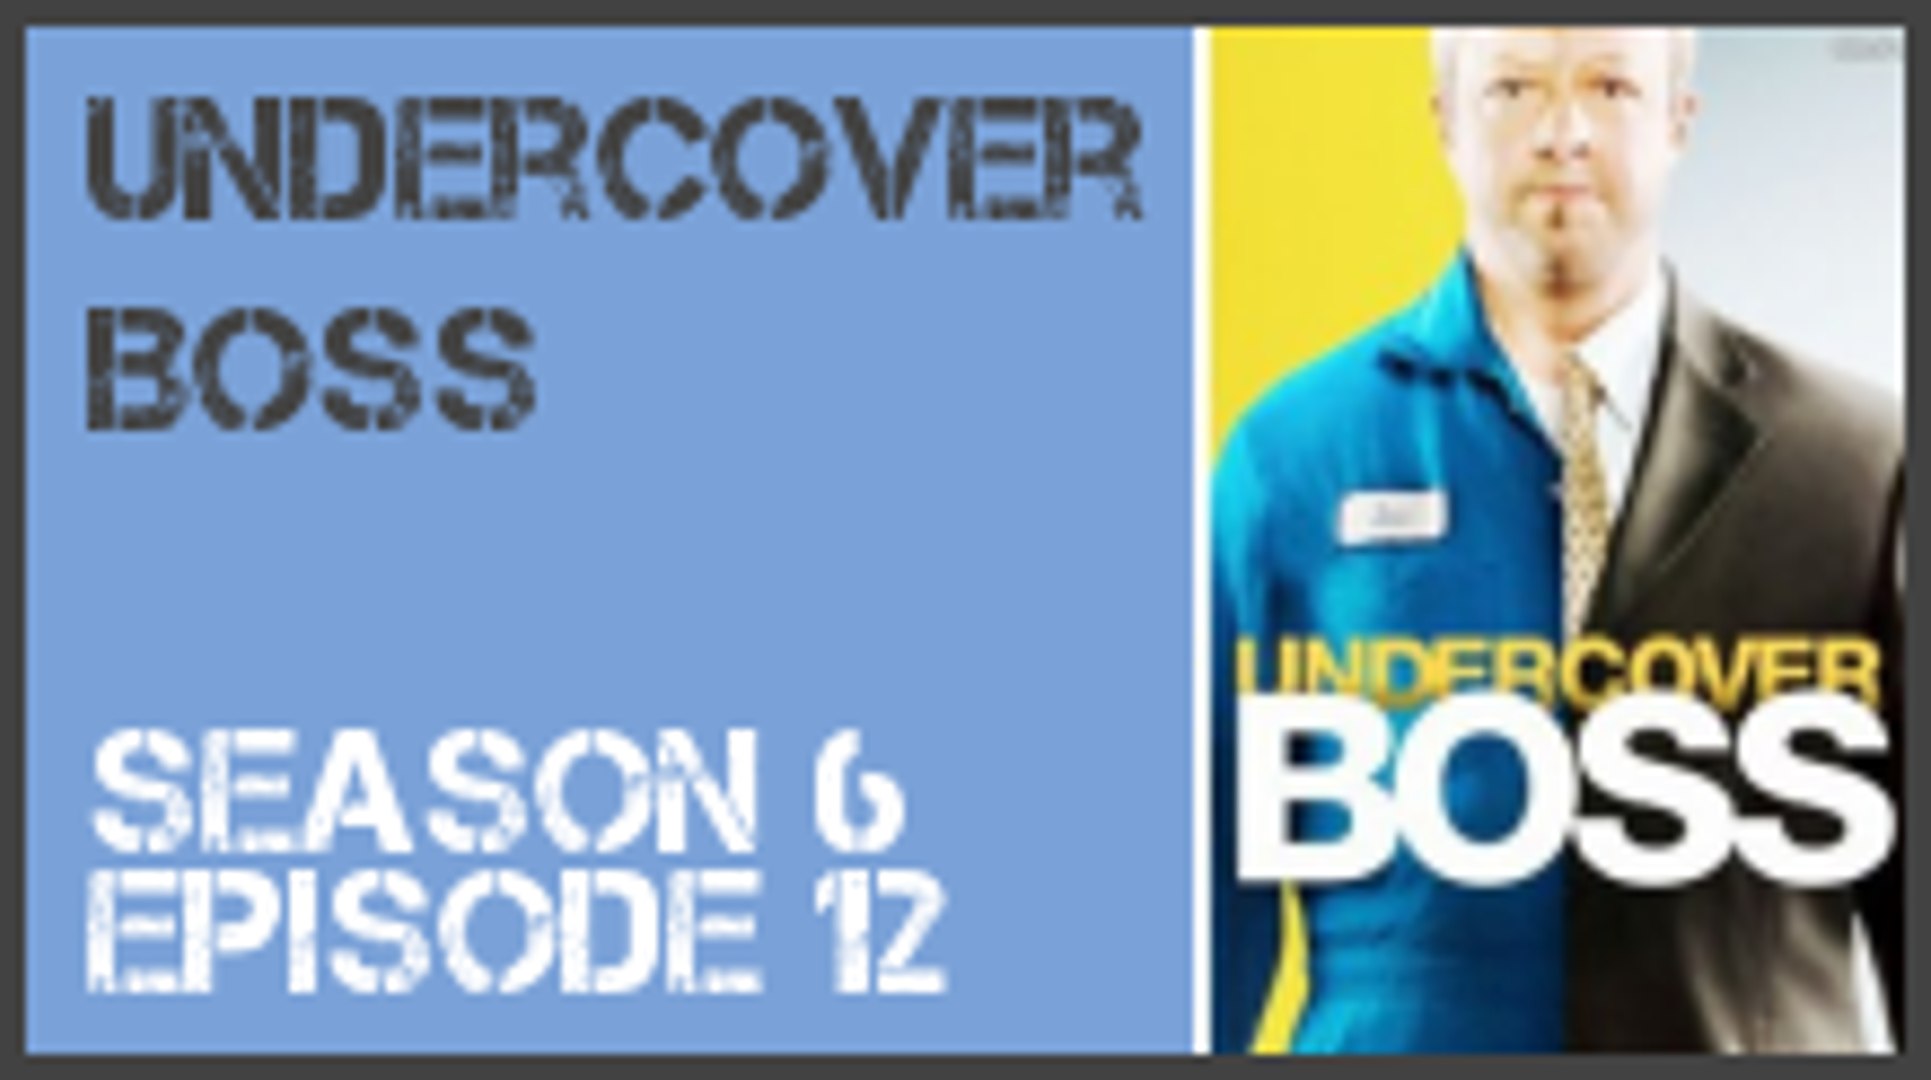 Undercover Boss season 6 episode 12 